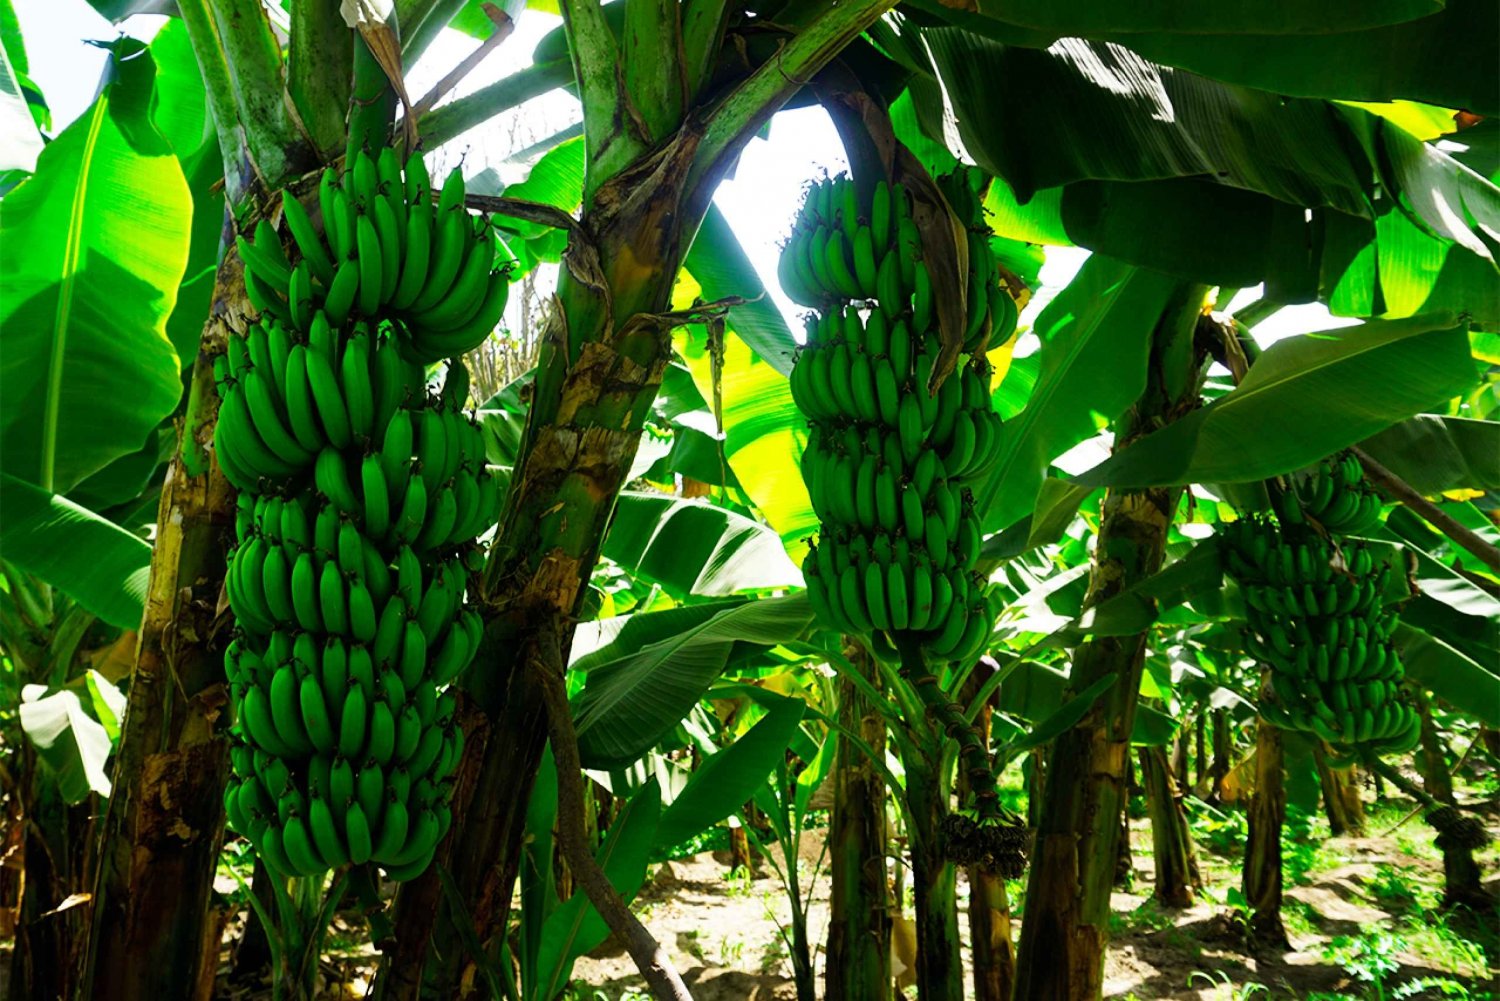 From Praia: Banana Plantation Tour and Cuscuz Workshop